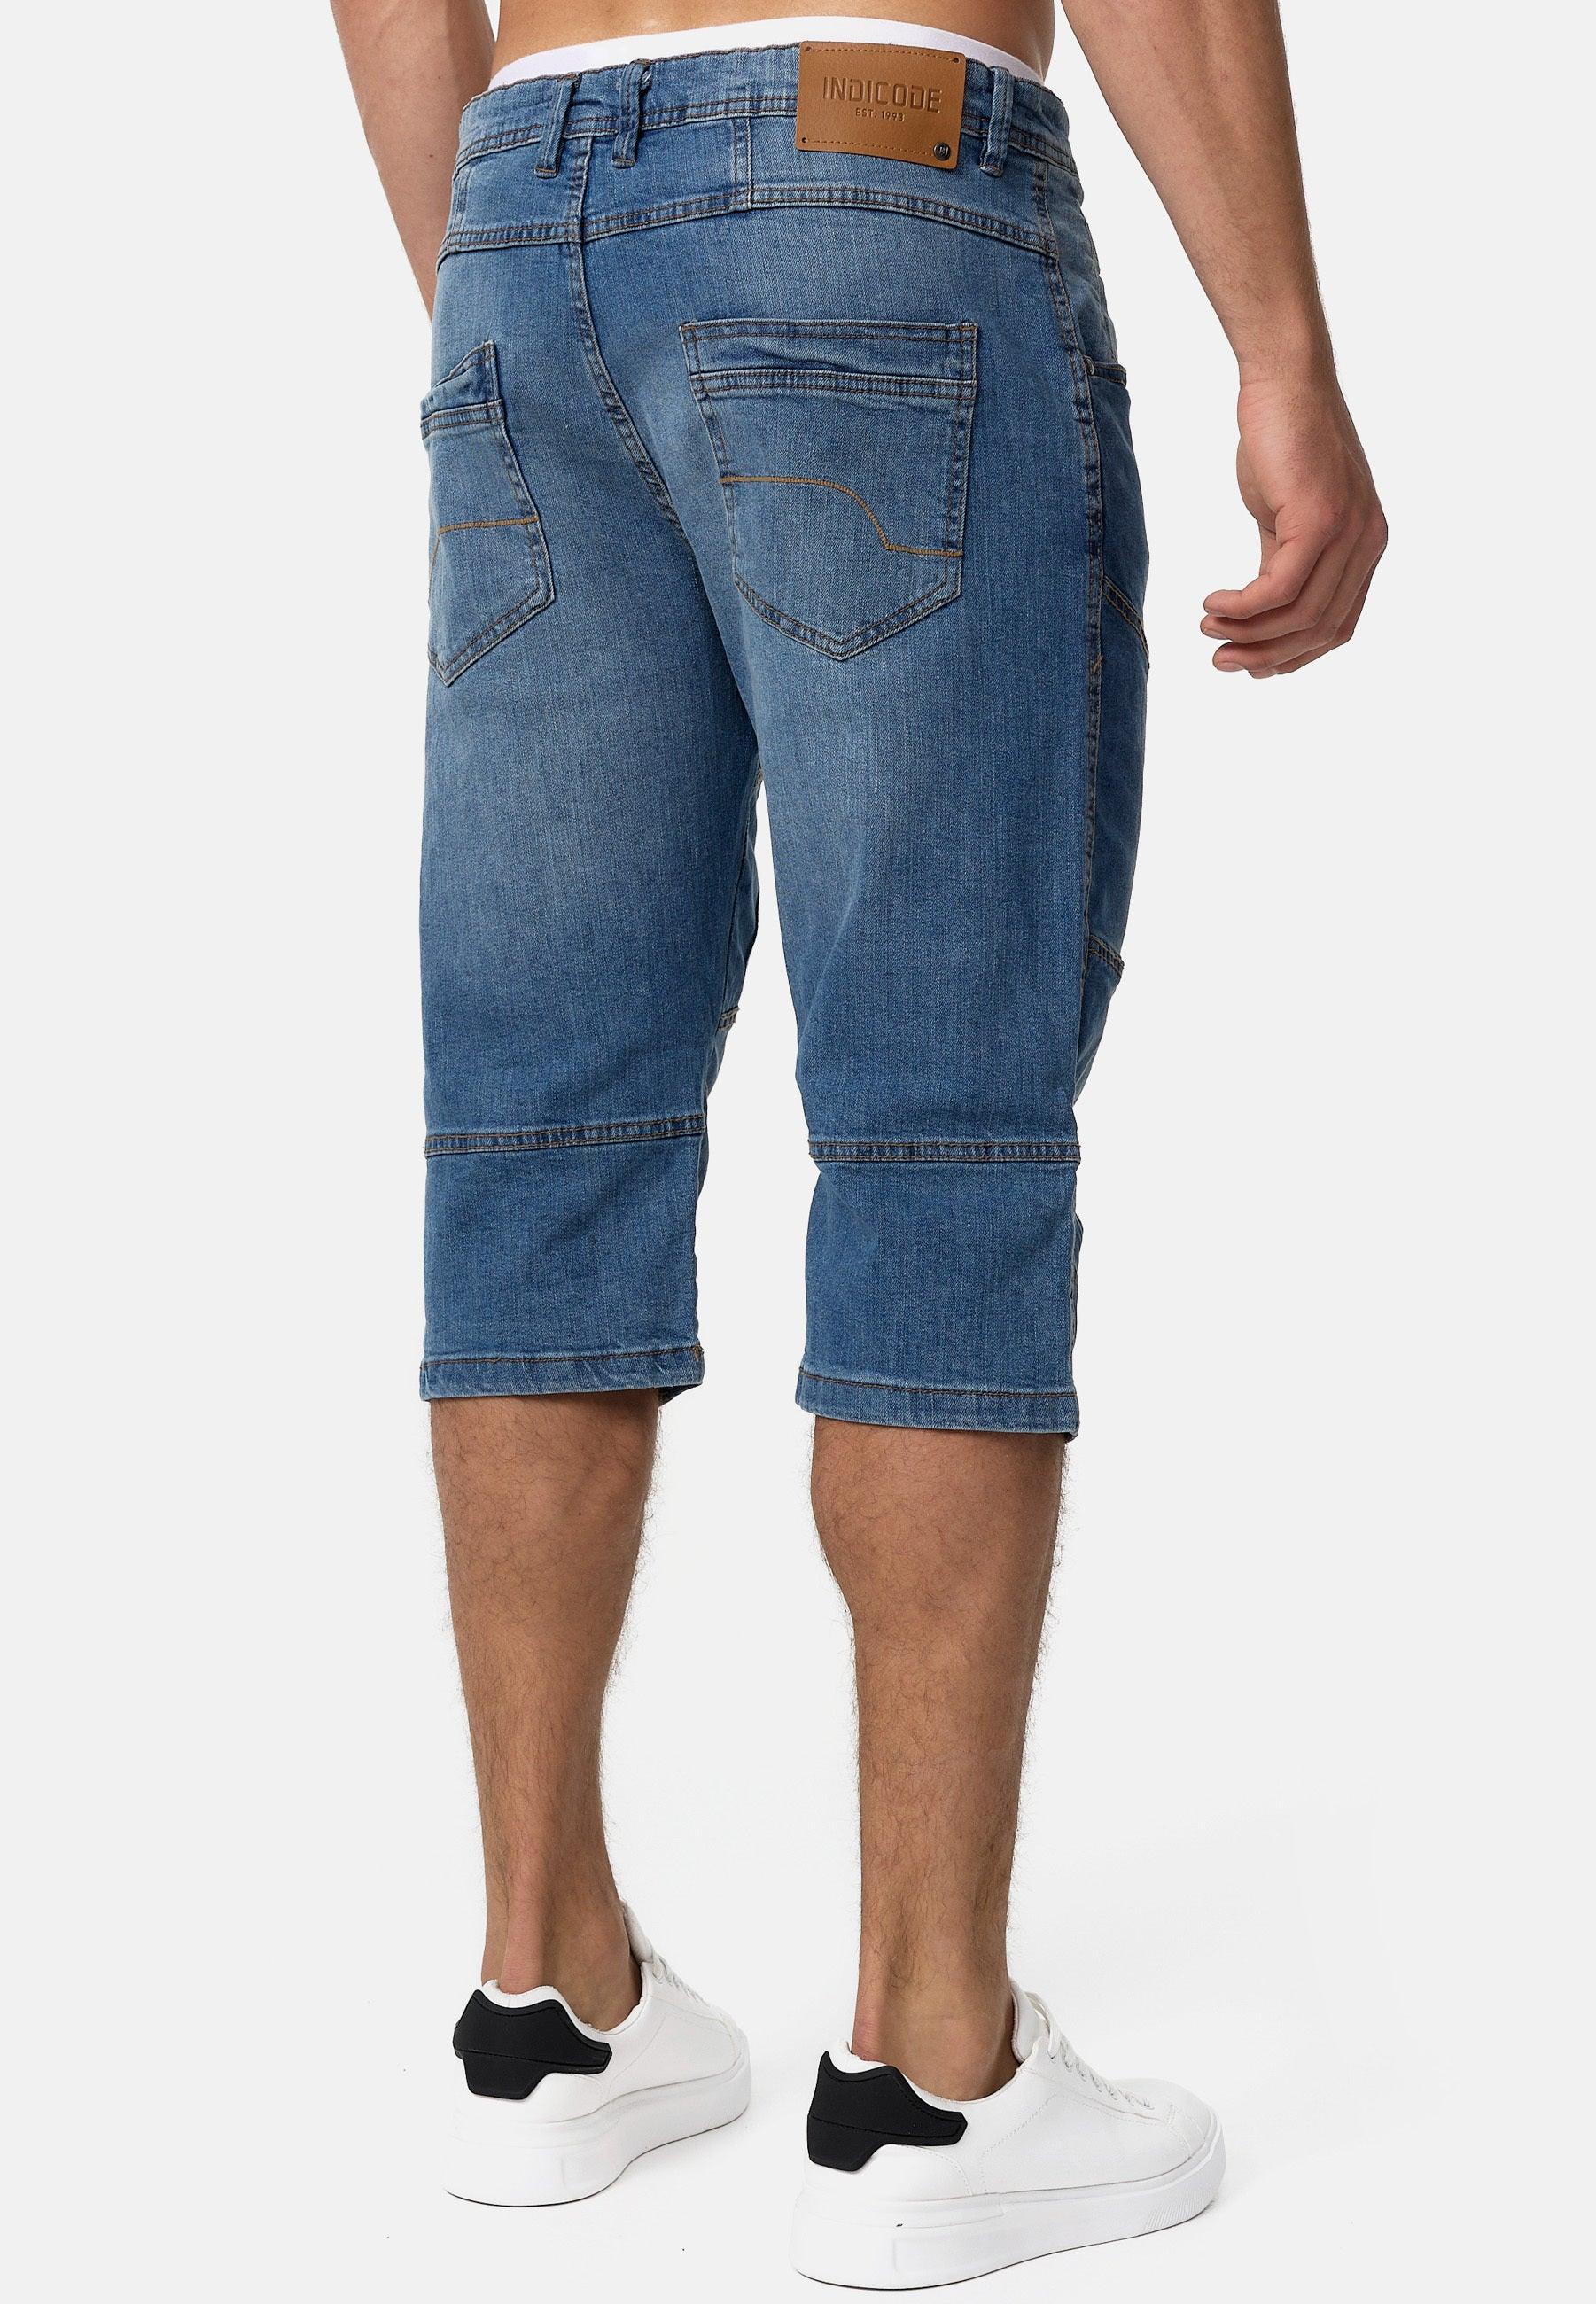 Men's Denim Shorts Half Pants Side Pocket Cargo Jeans Trousers Regular Fit  | eBay